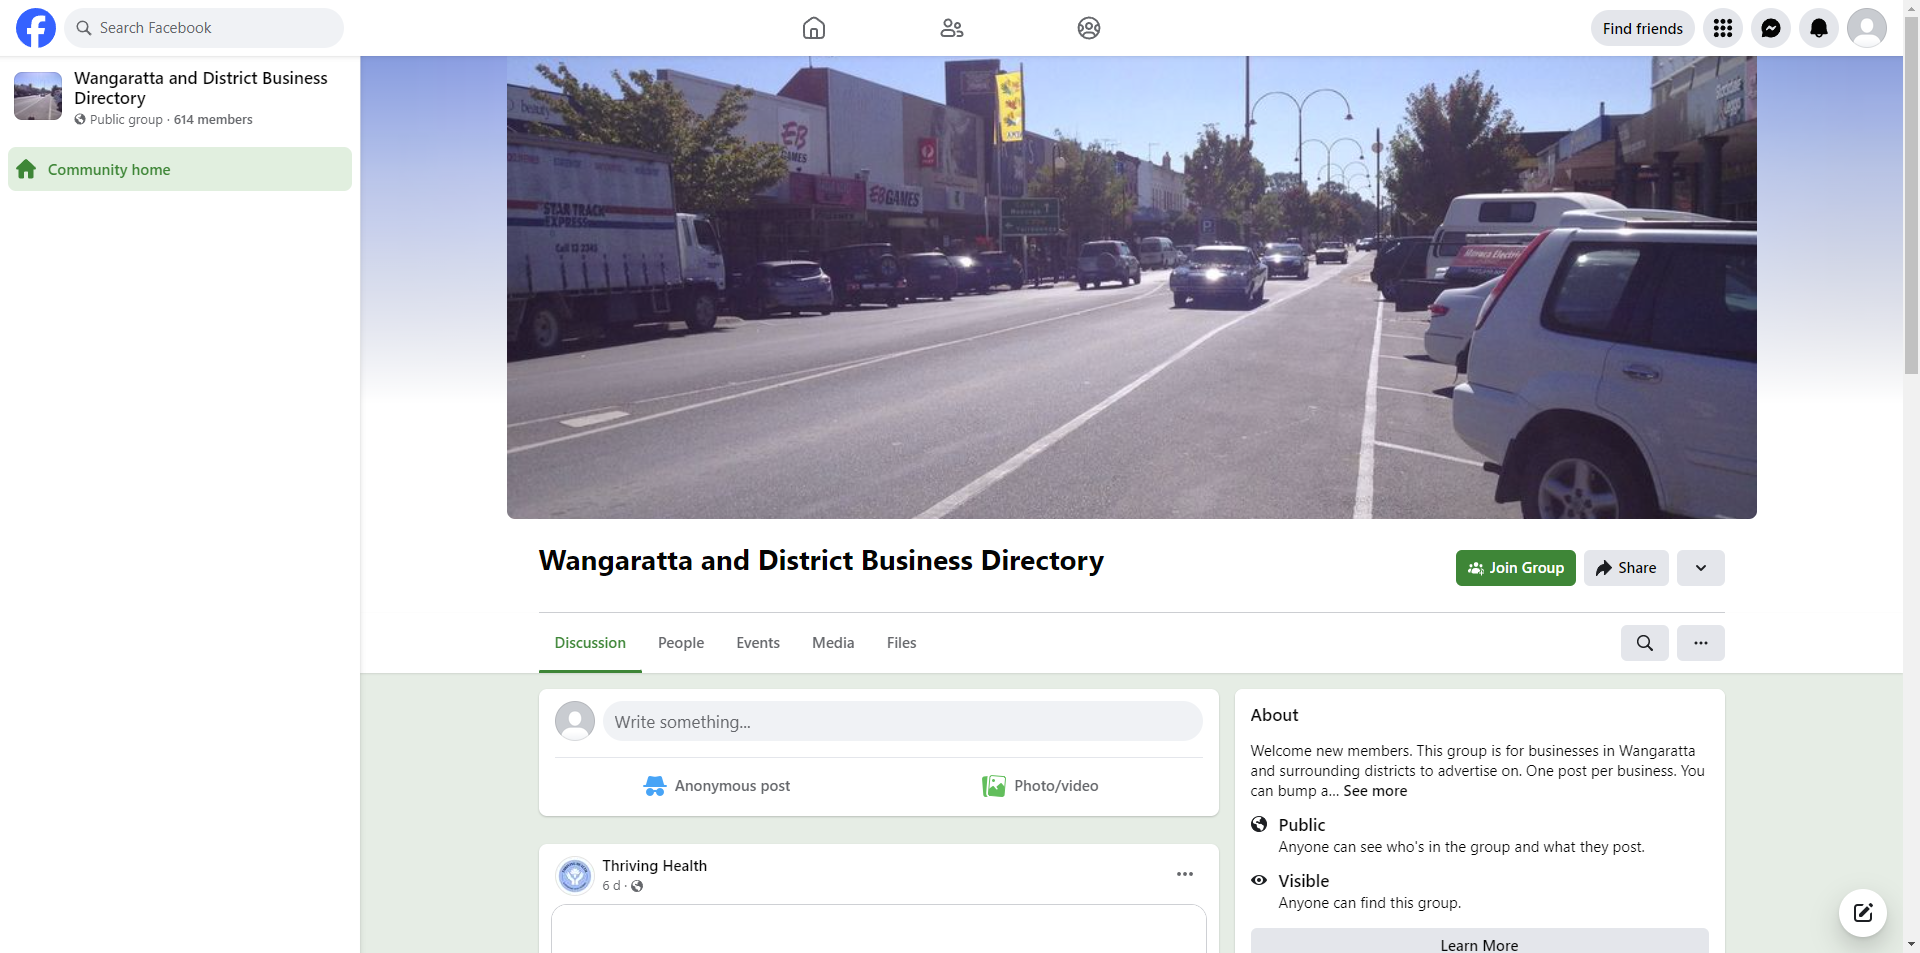 Wangaratta and District Business Directory